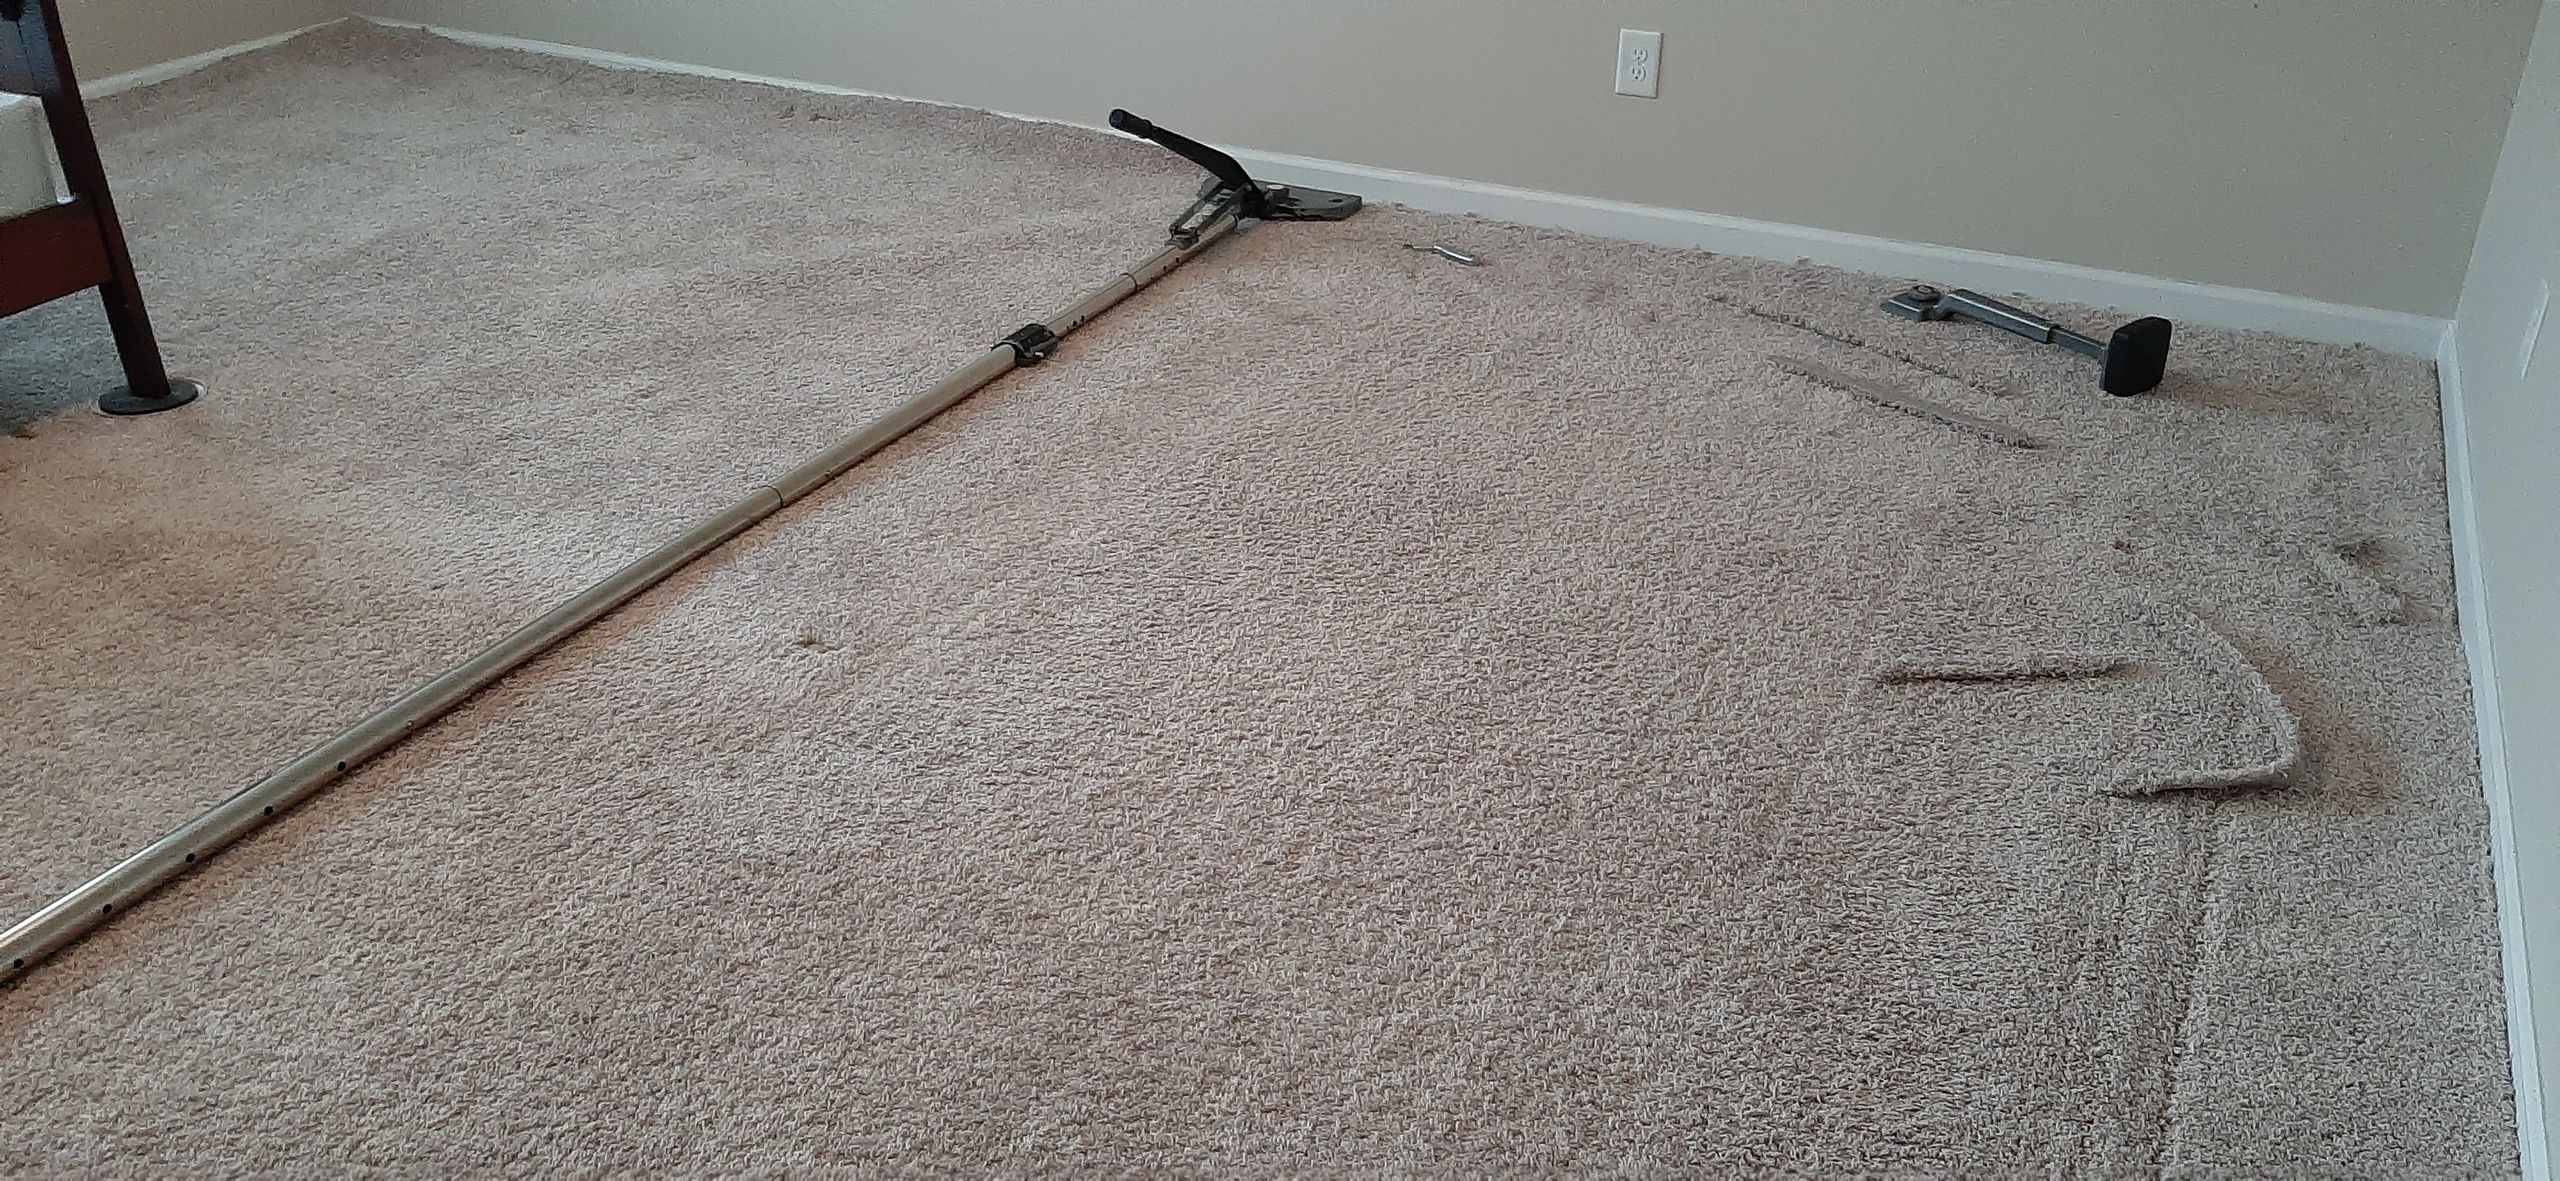 how to dye carpet - Carpet Stretch and Rescue 2018 Blog